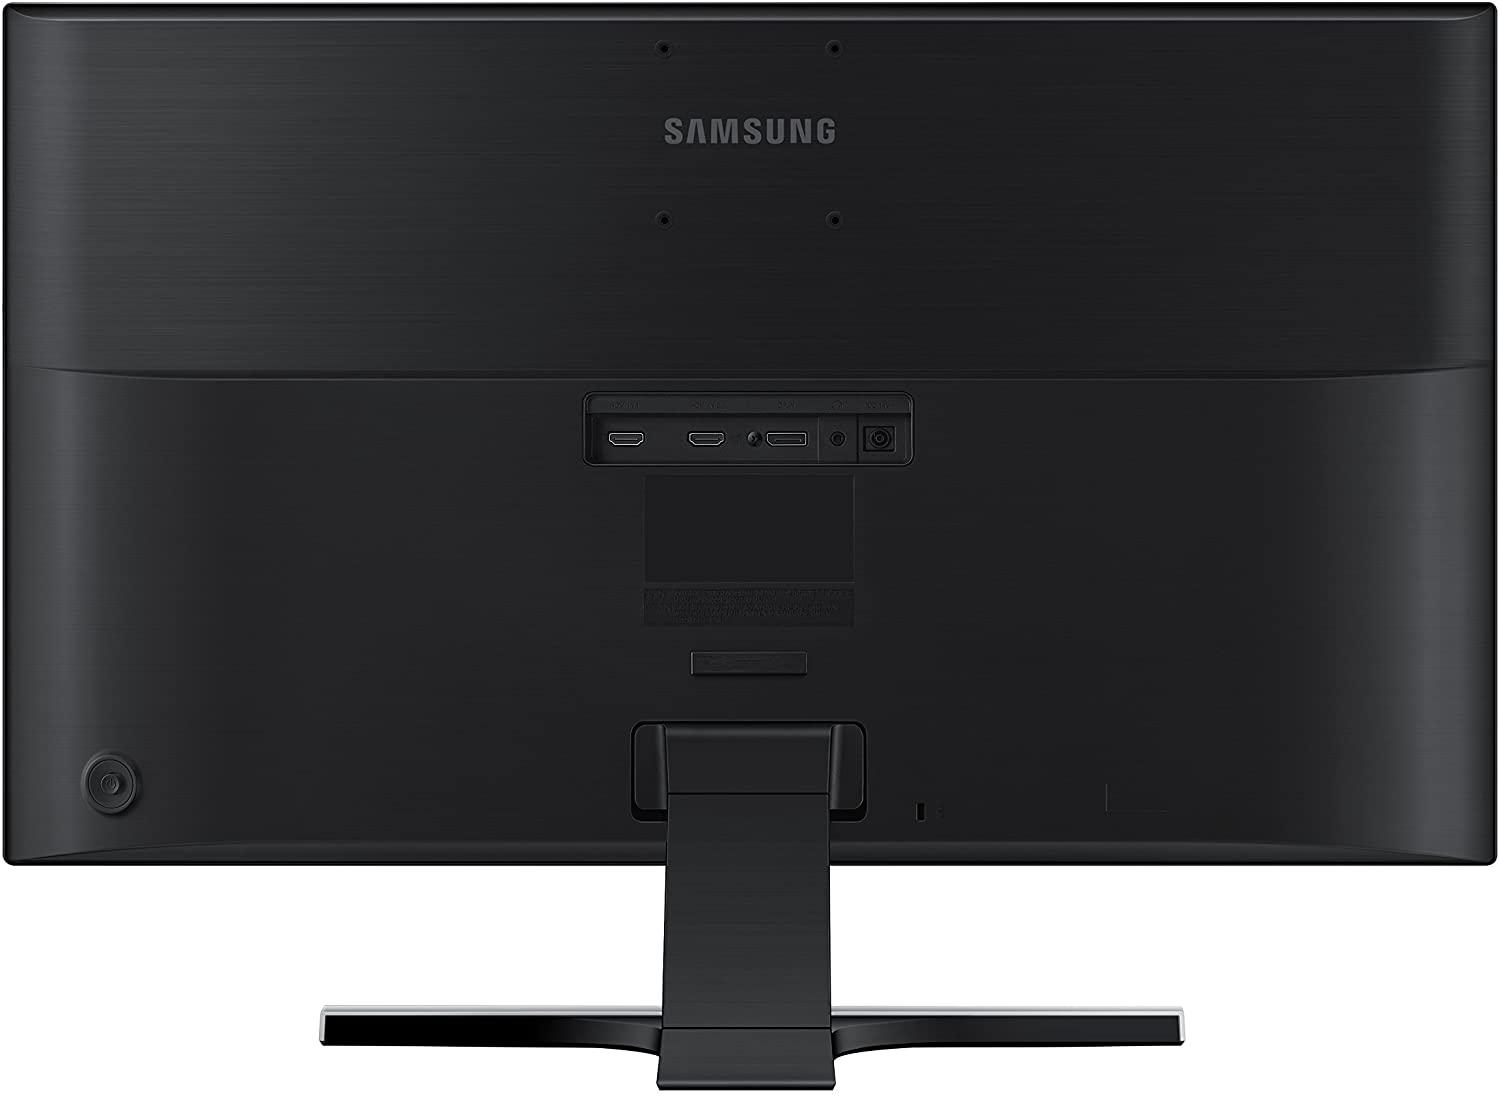 Samsung LU28E570DS/ZA-RB 28" UE570 Series UHD Monitor - Certified Refurbished